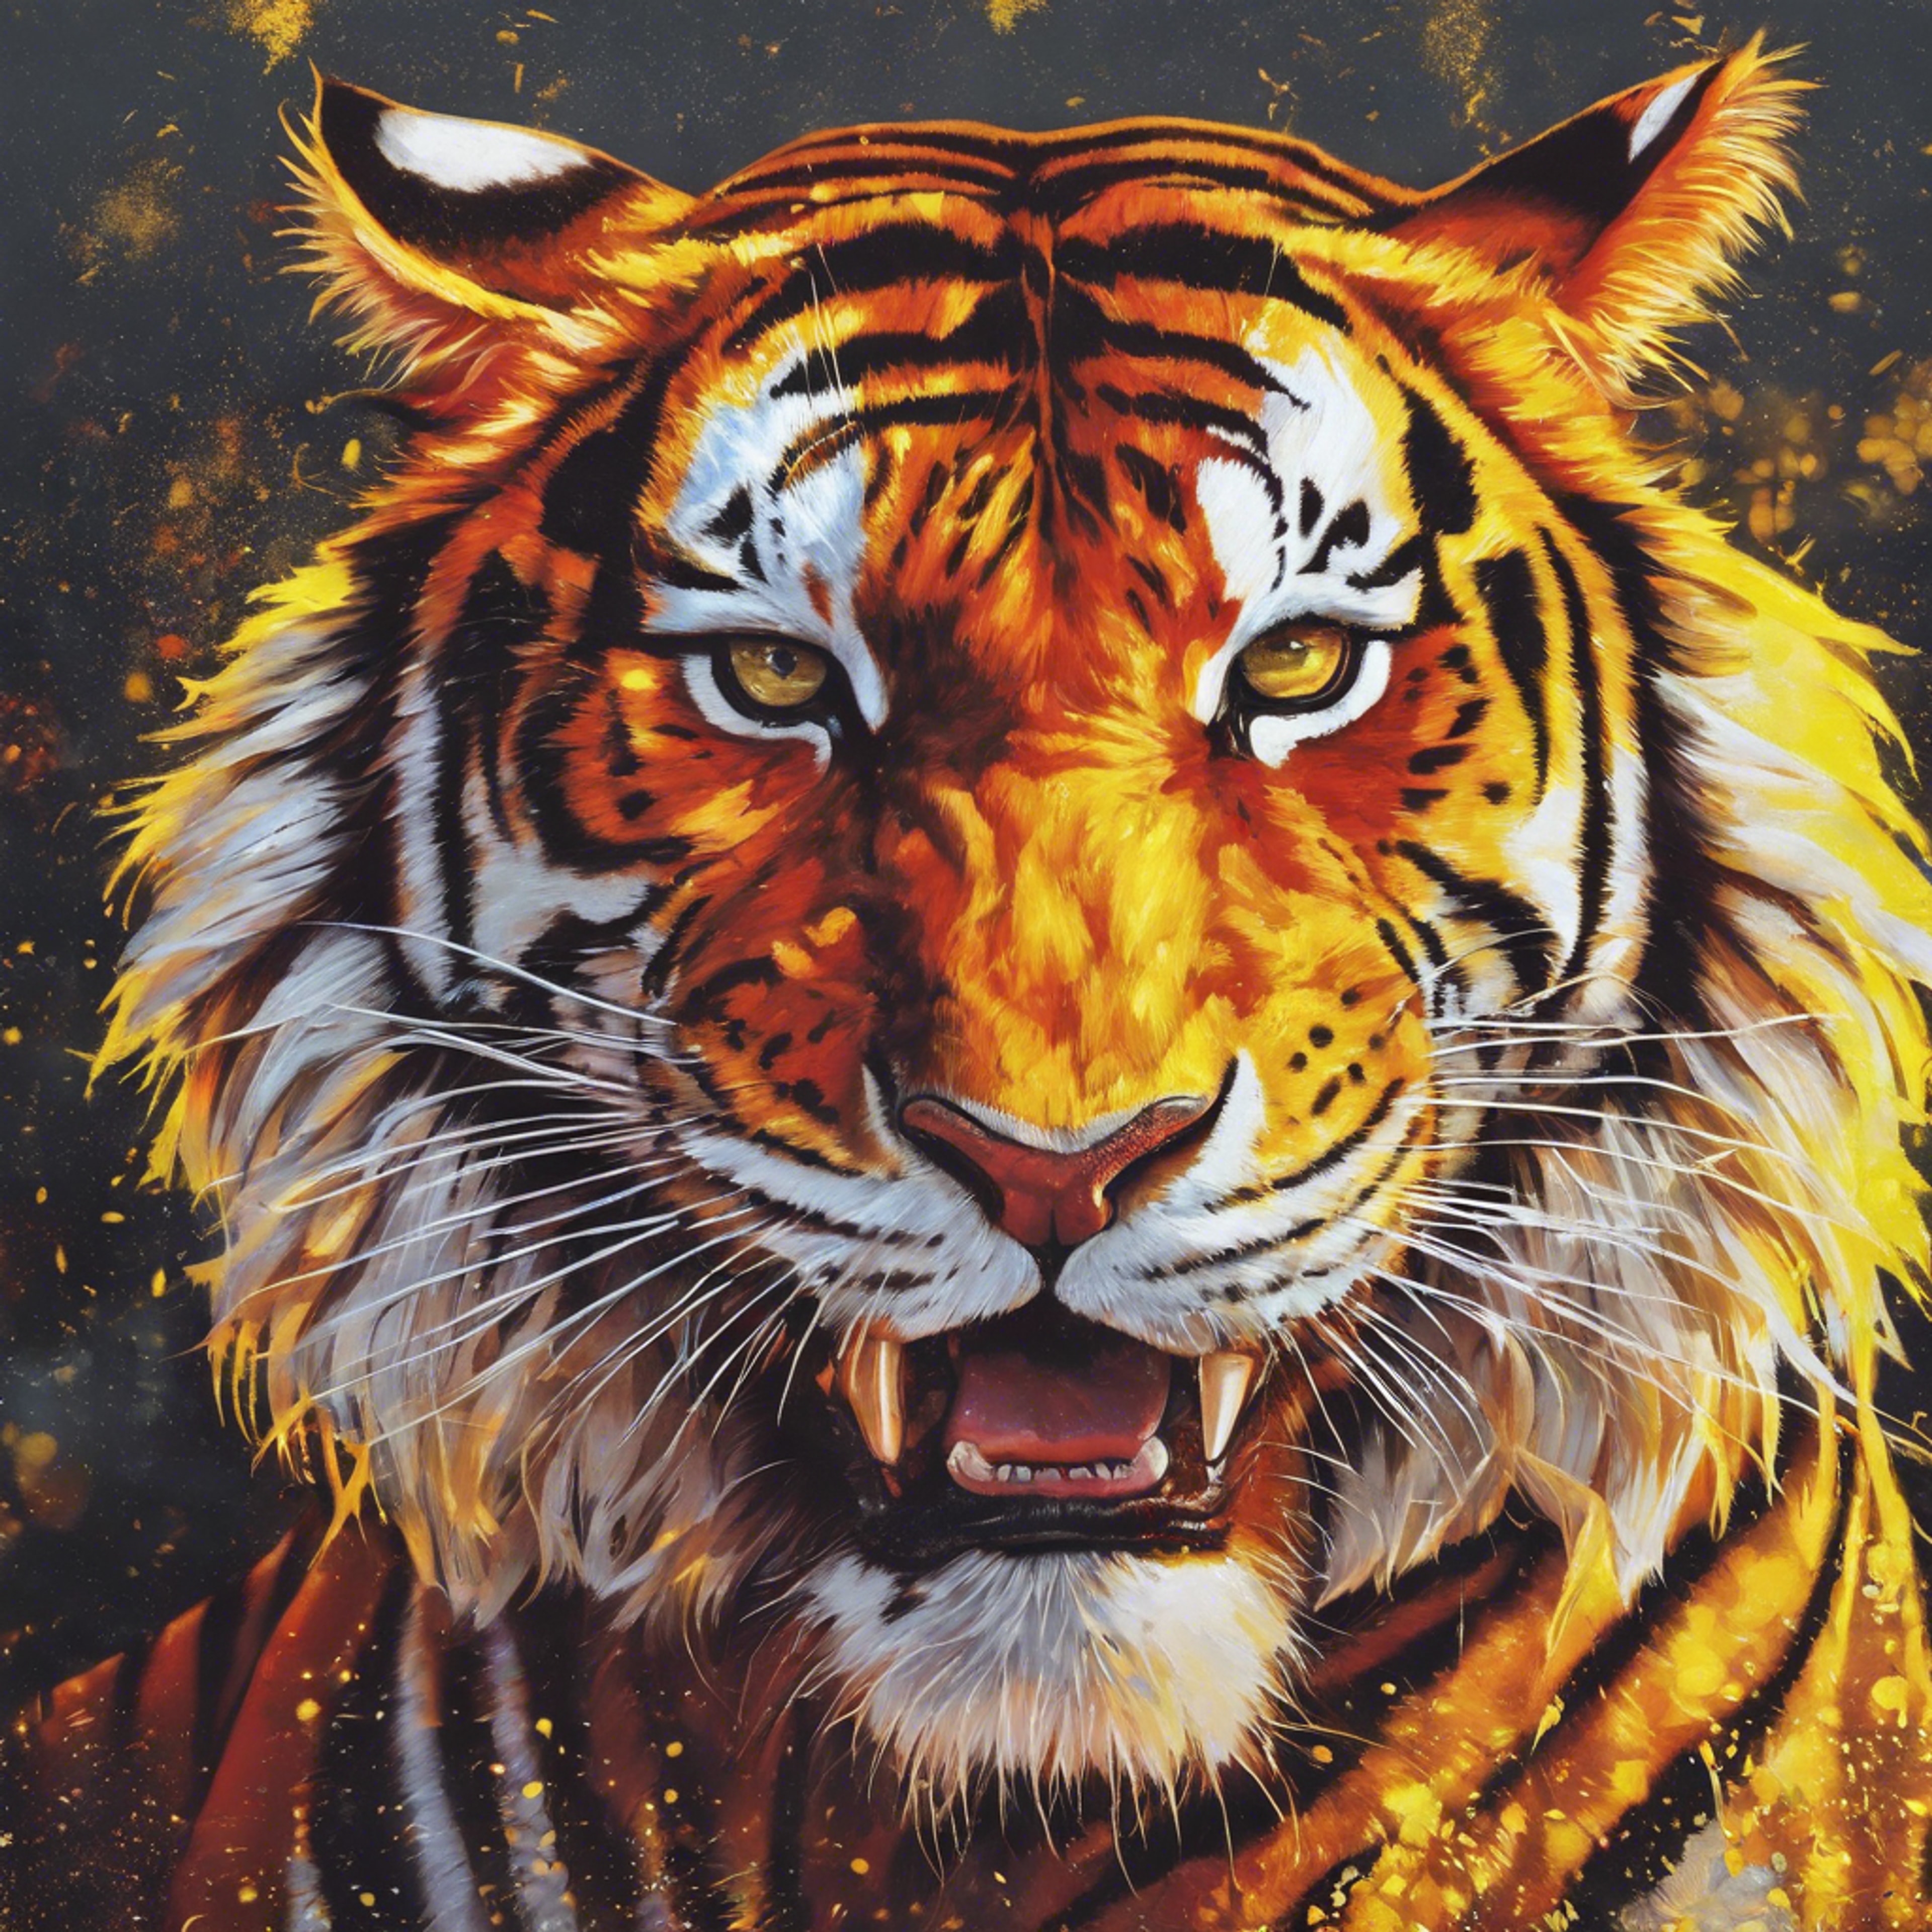 A mural featuring a cool red tiger roaring, under a bright yellow sun, symbolizing strength and energy. Дэлгэцийн зураг[b92d4e06da1a4dd6b9b7]